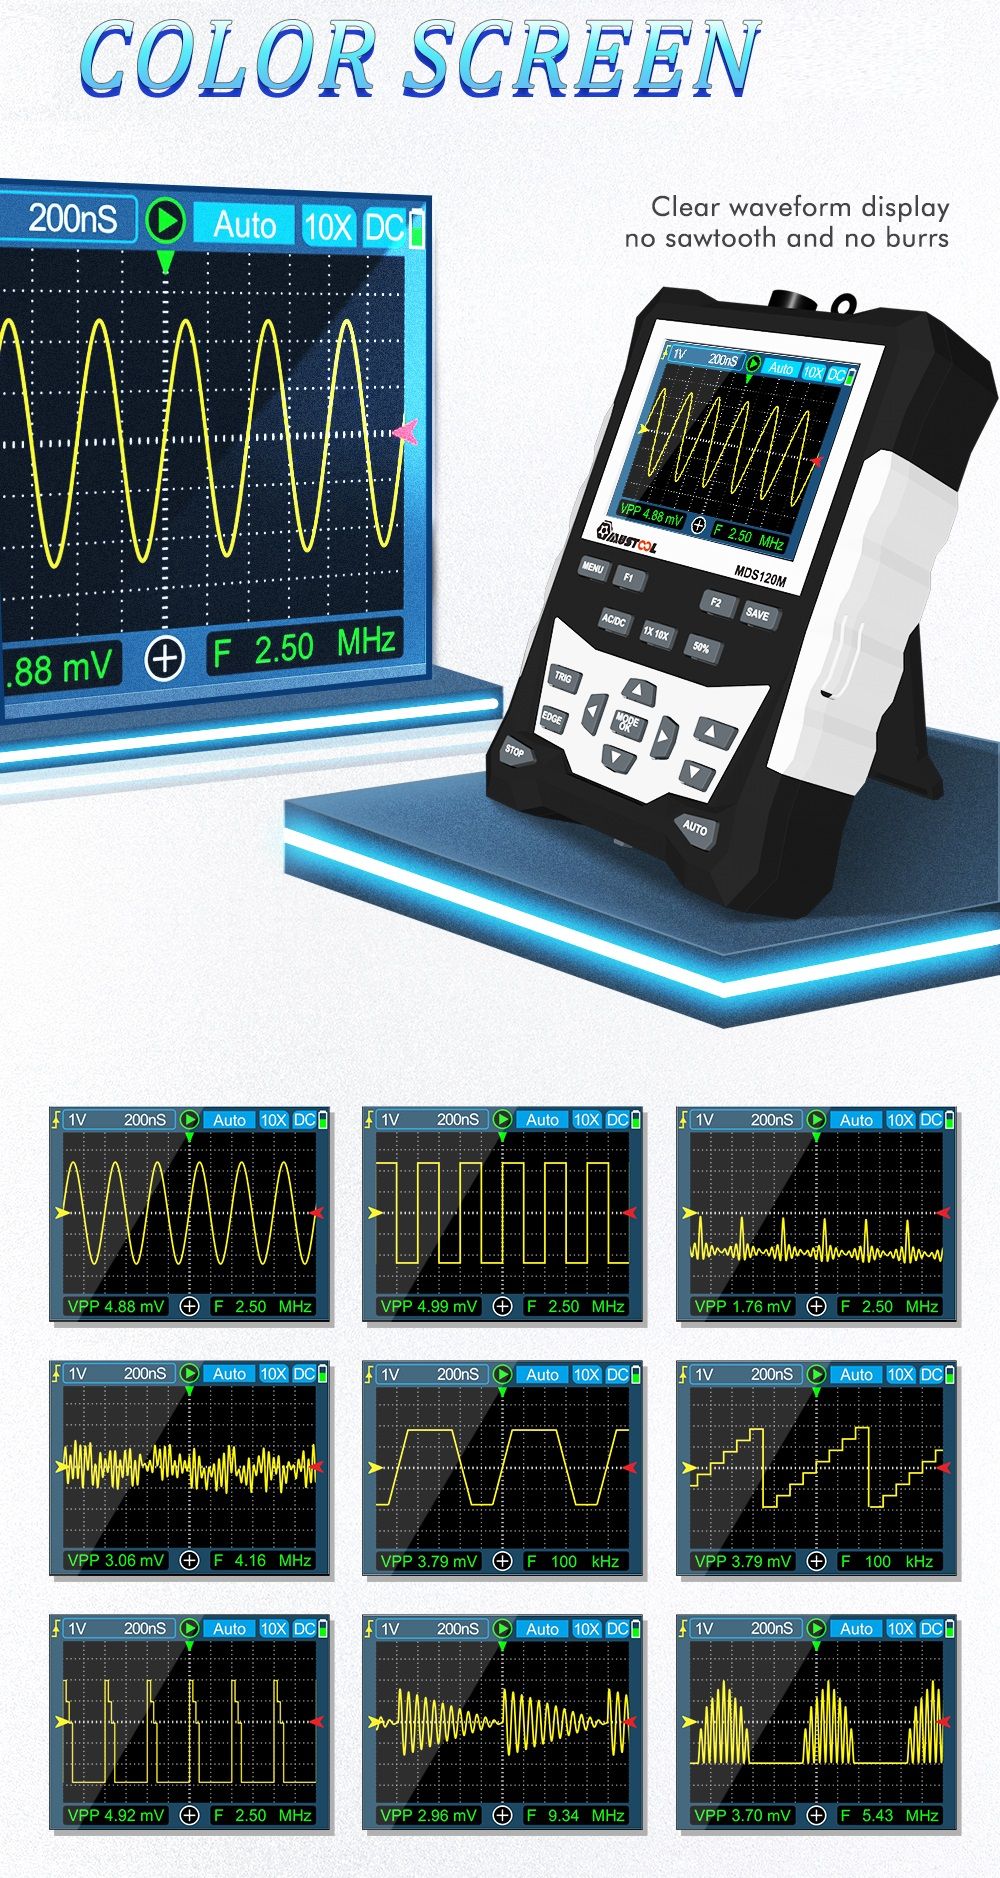 MUSTOOL-MDS120M-Professional-Digital-Oscilloscope-120MHz-Analog-Bandwidth-500MSs-Sampling-Rate-320x2-1759856